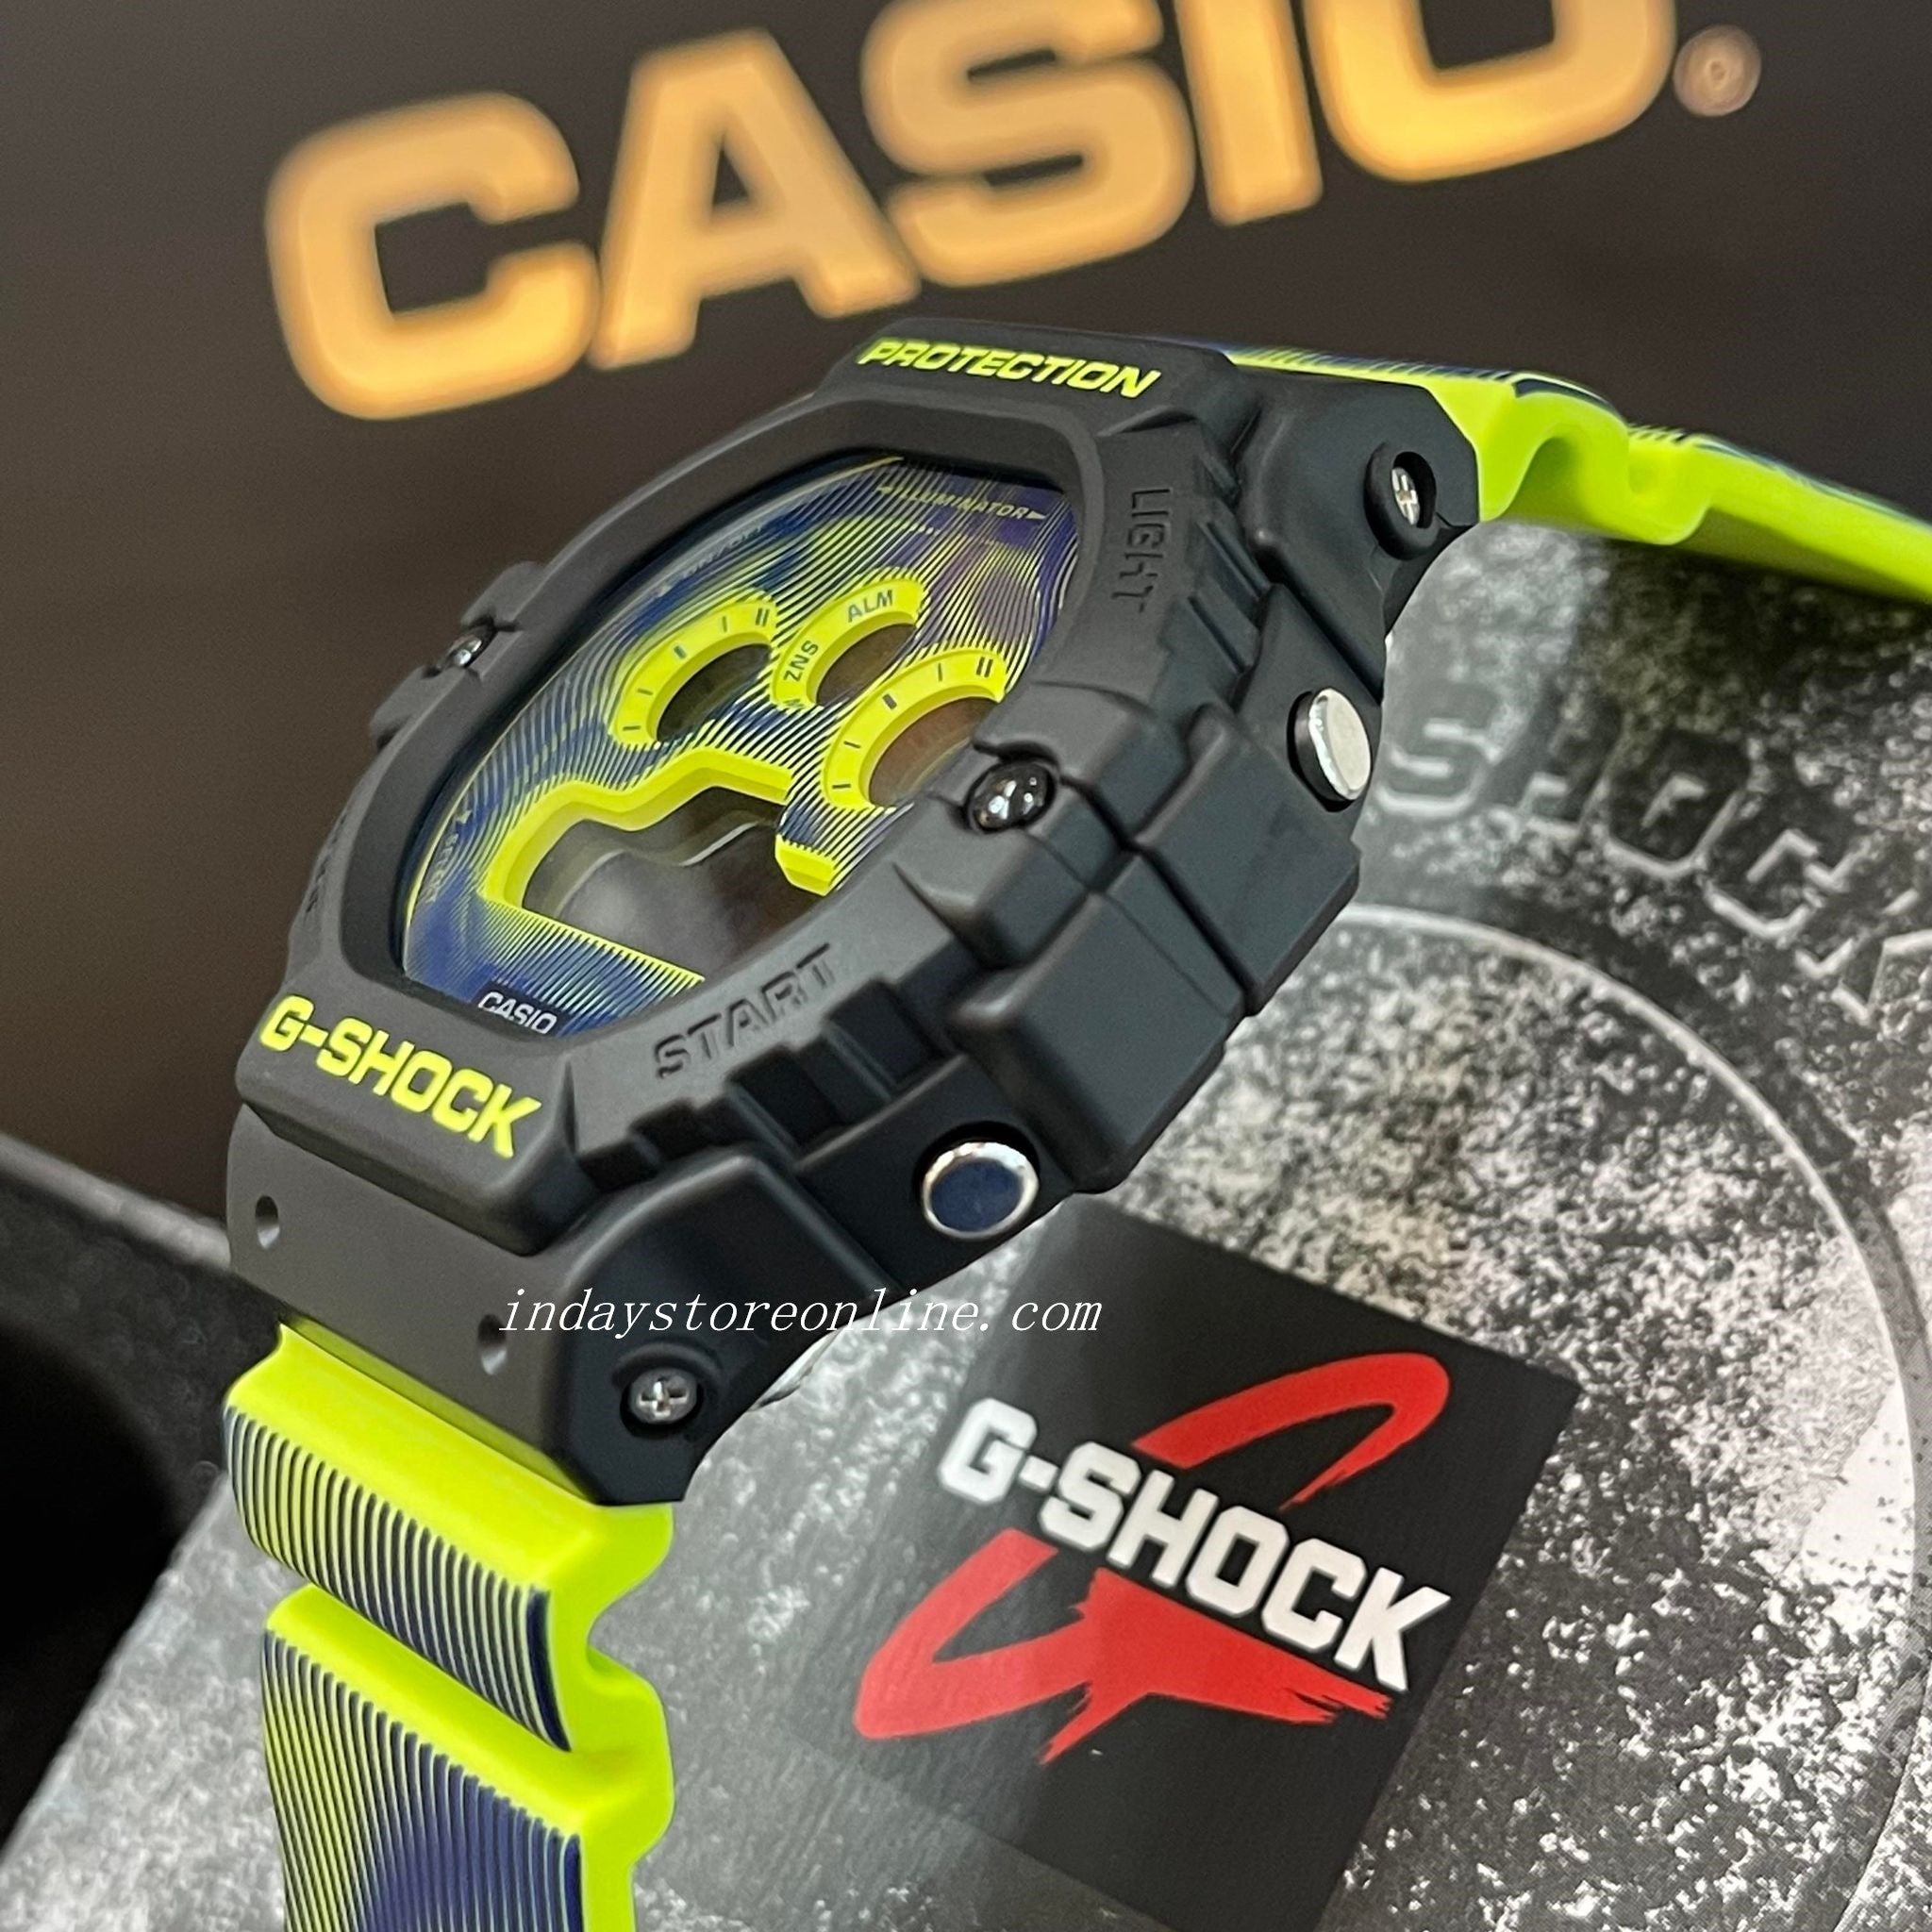 Casio G-Shock Men's Watch DW-5900TD-9 Digital 5900 Series Time 